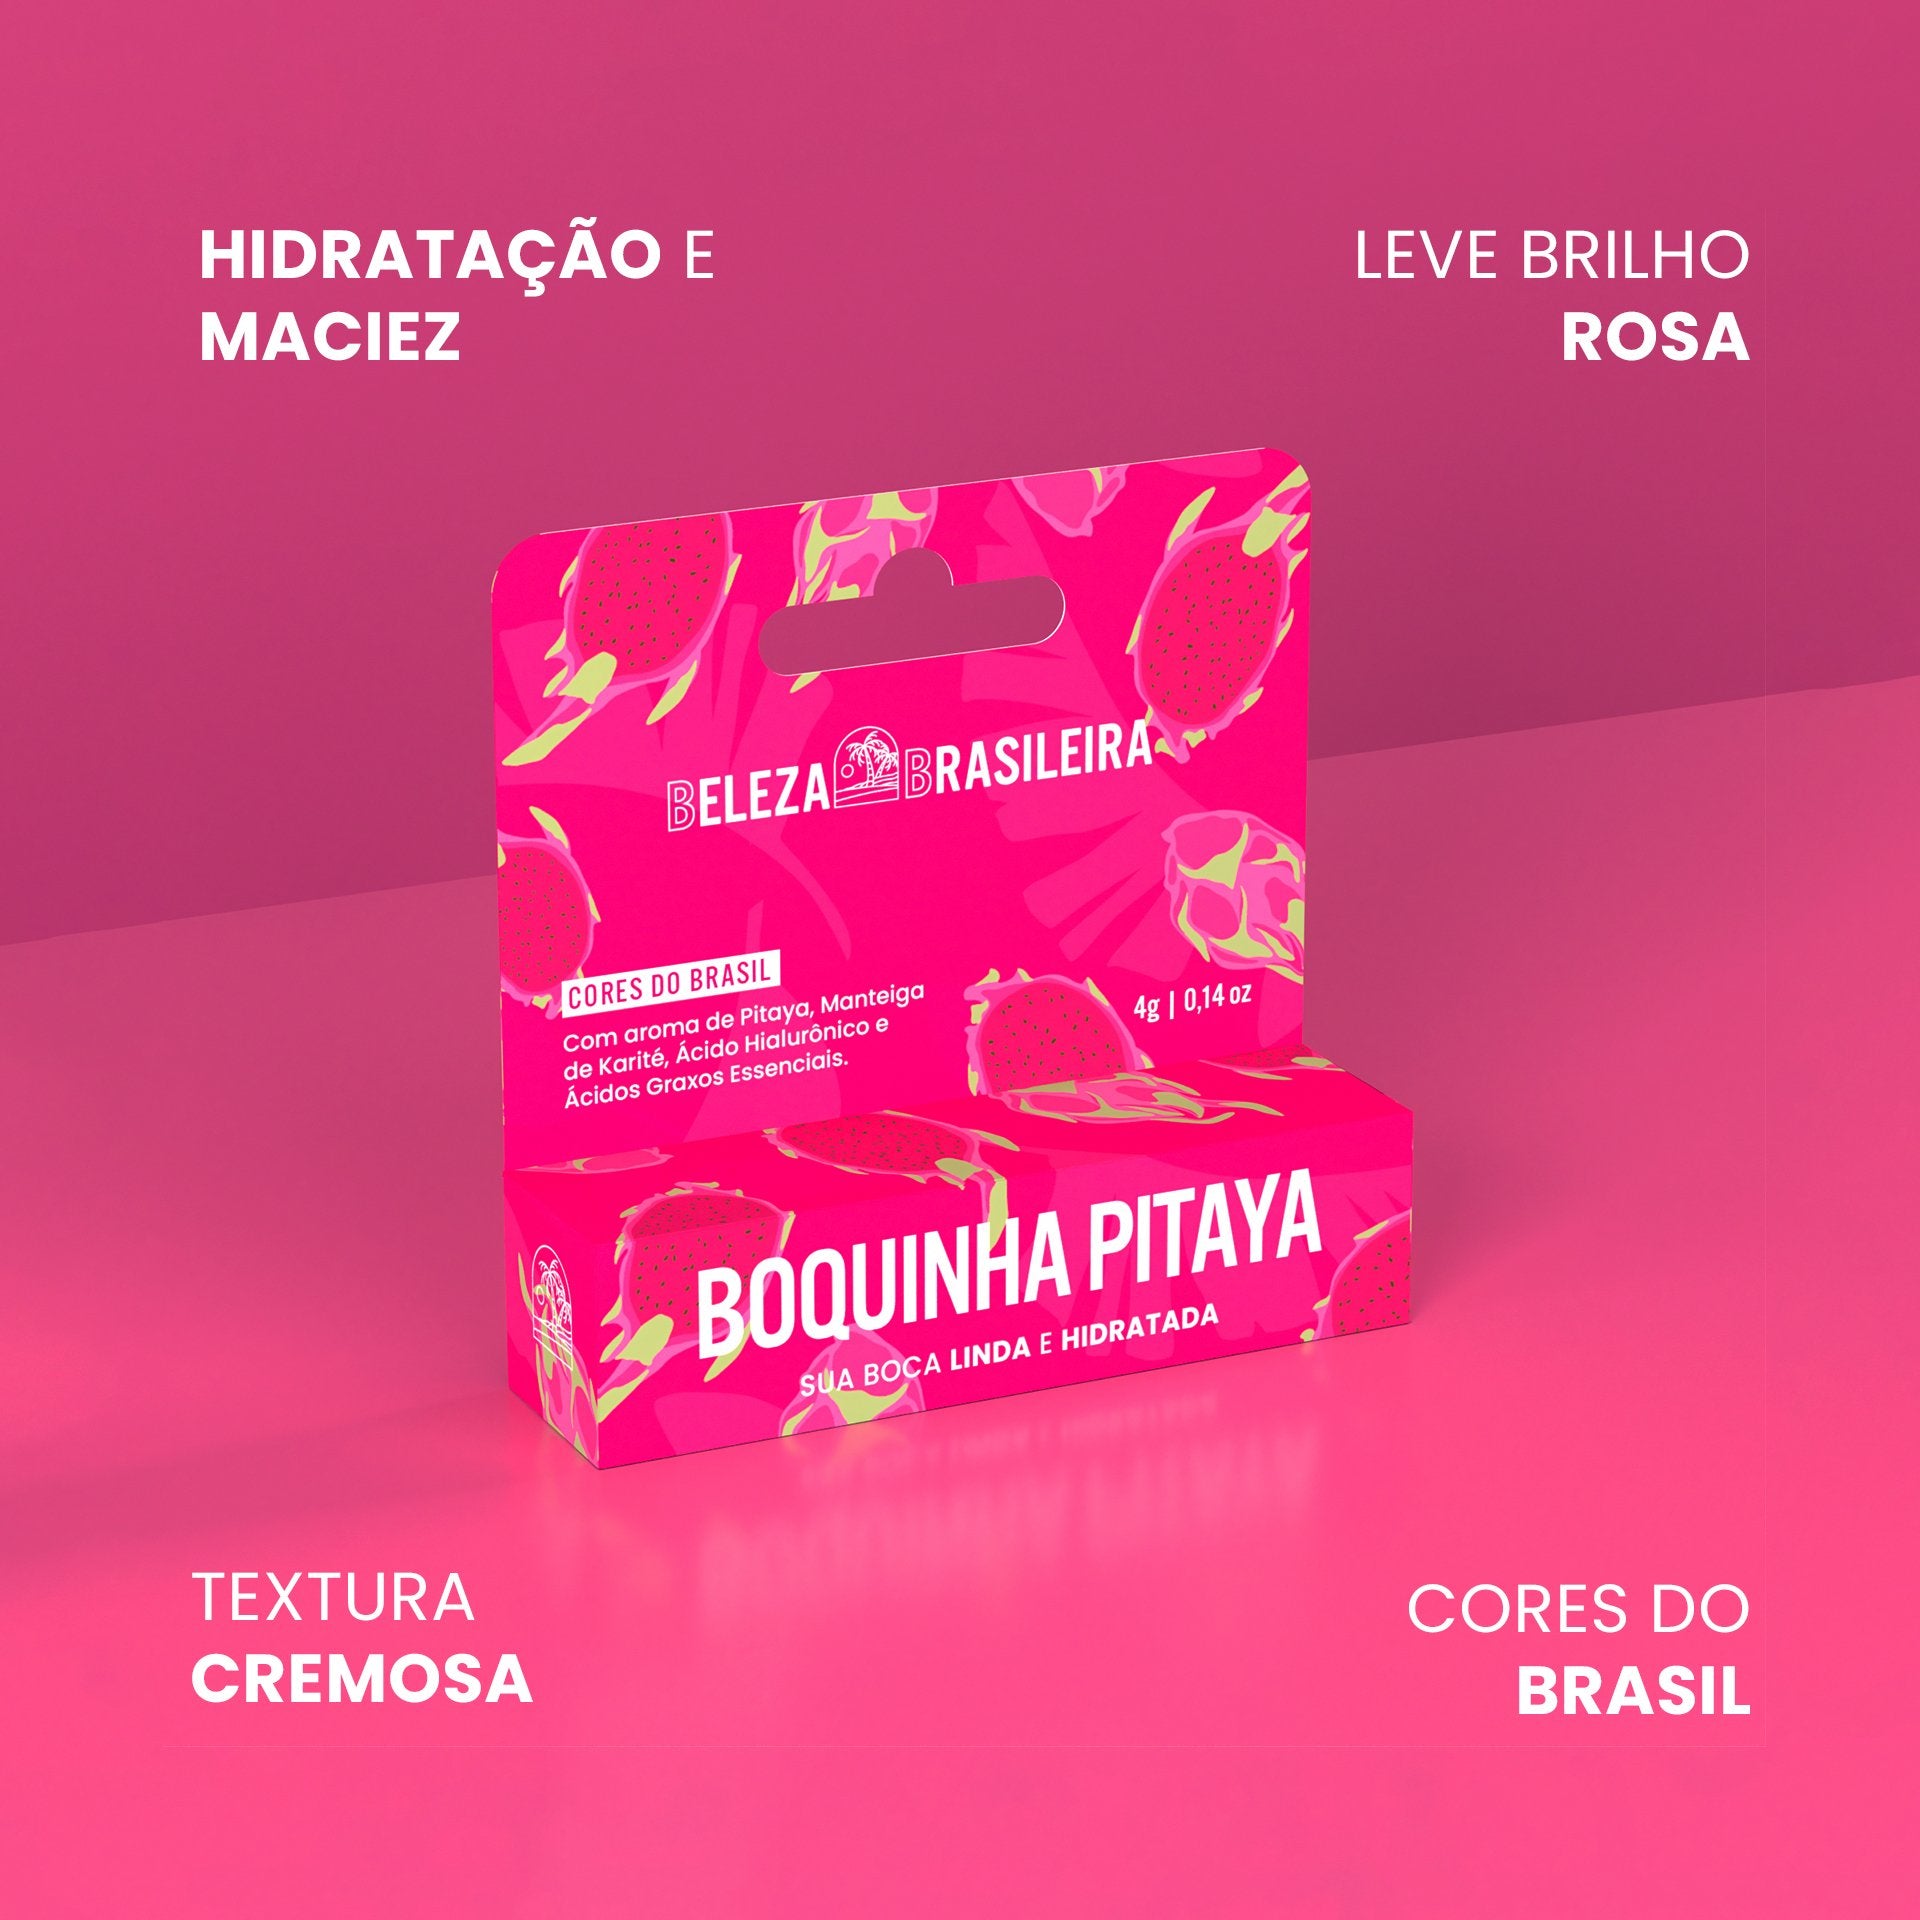 Boquinha Cream Pitaya - BELEZA BRASILEIRAlip balm